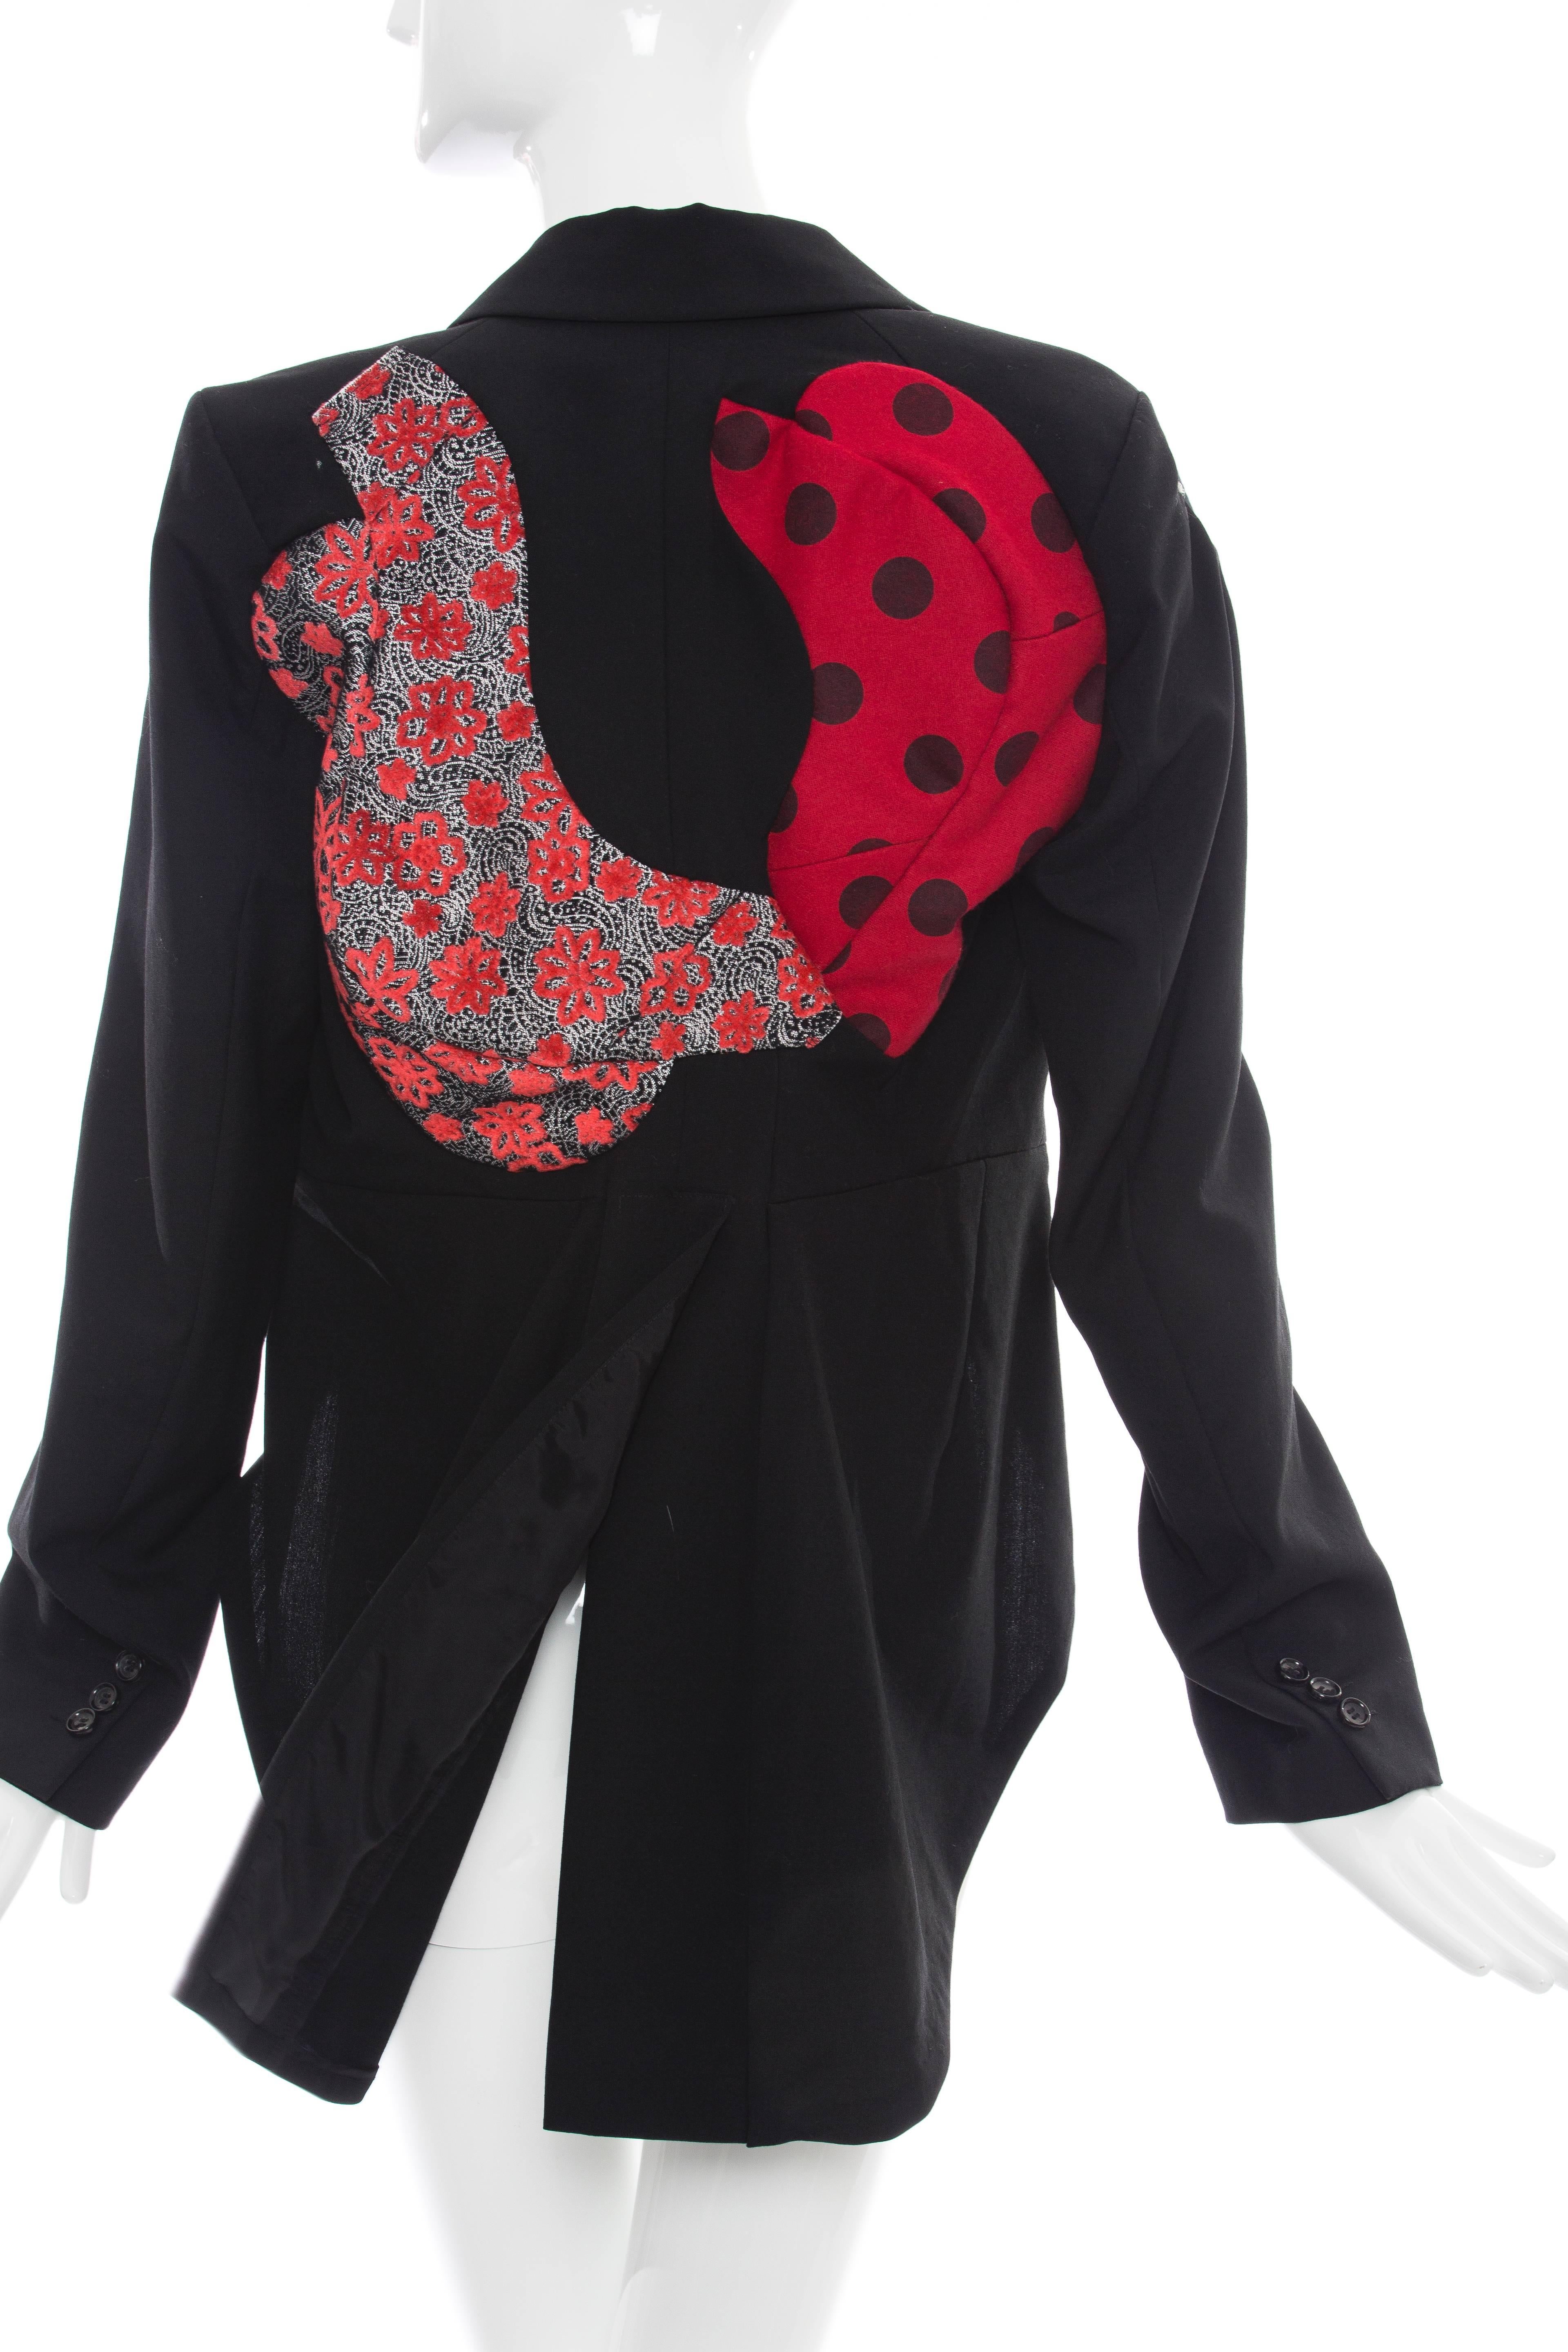 Comme des Garcons Black Wool Patchworked Brocades Jacket, Spring 2010 For Sale 1